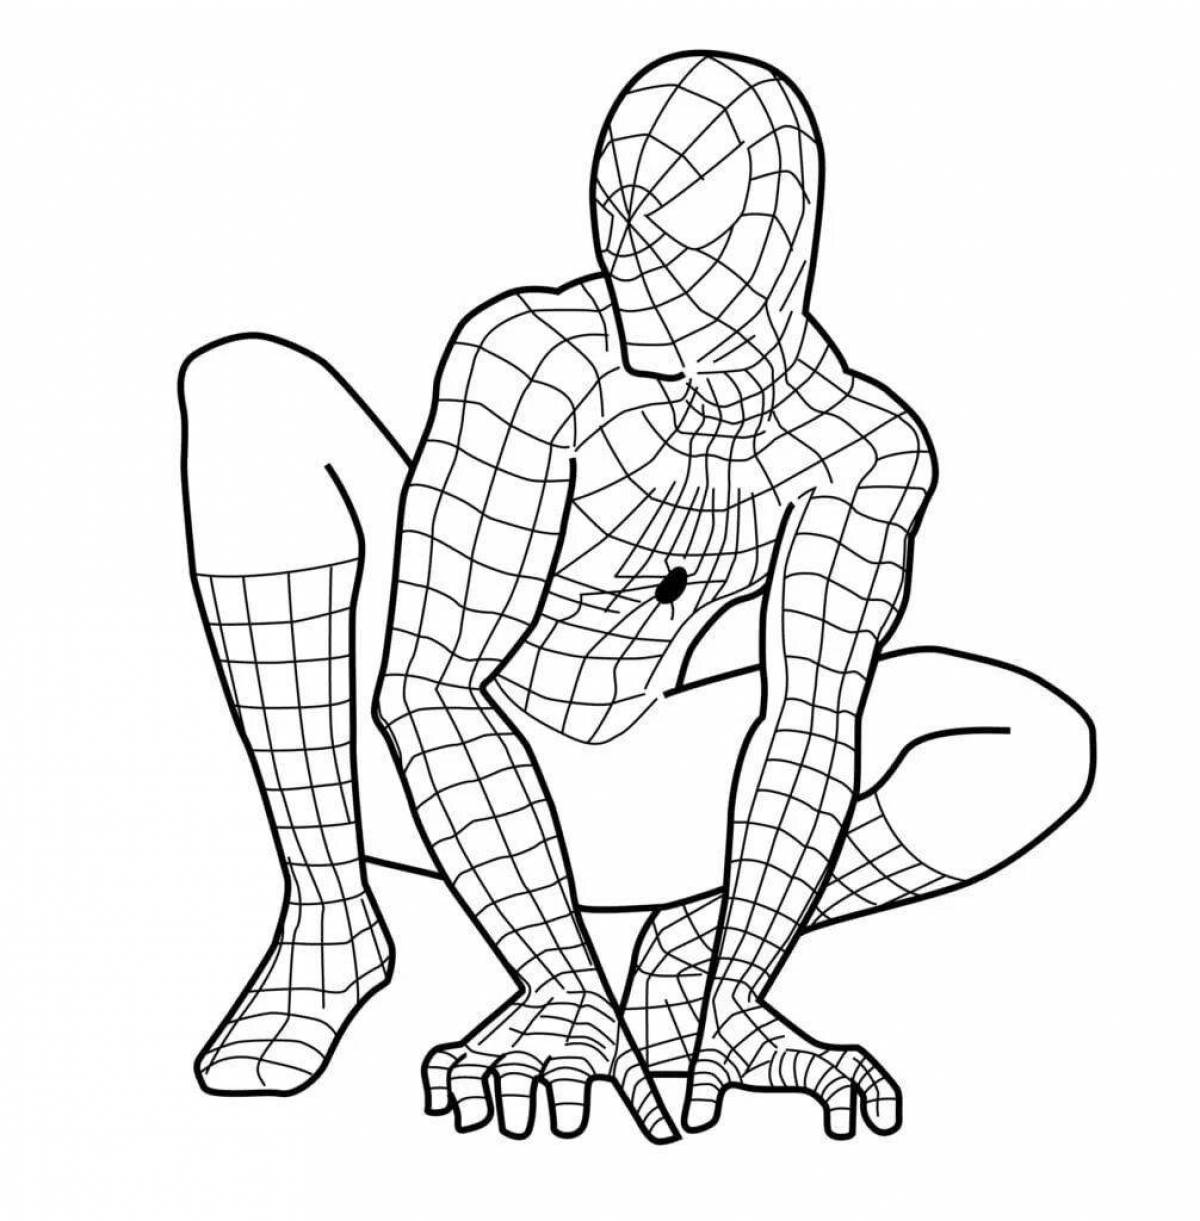 Spider-man intense coloring